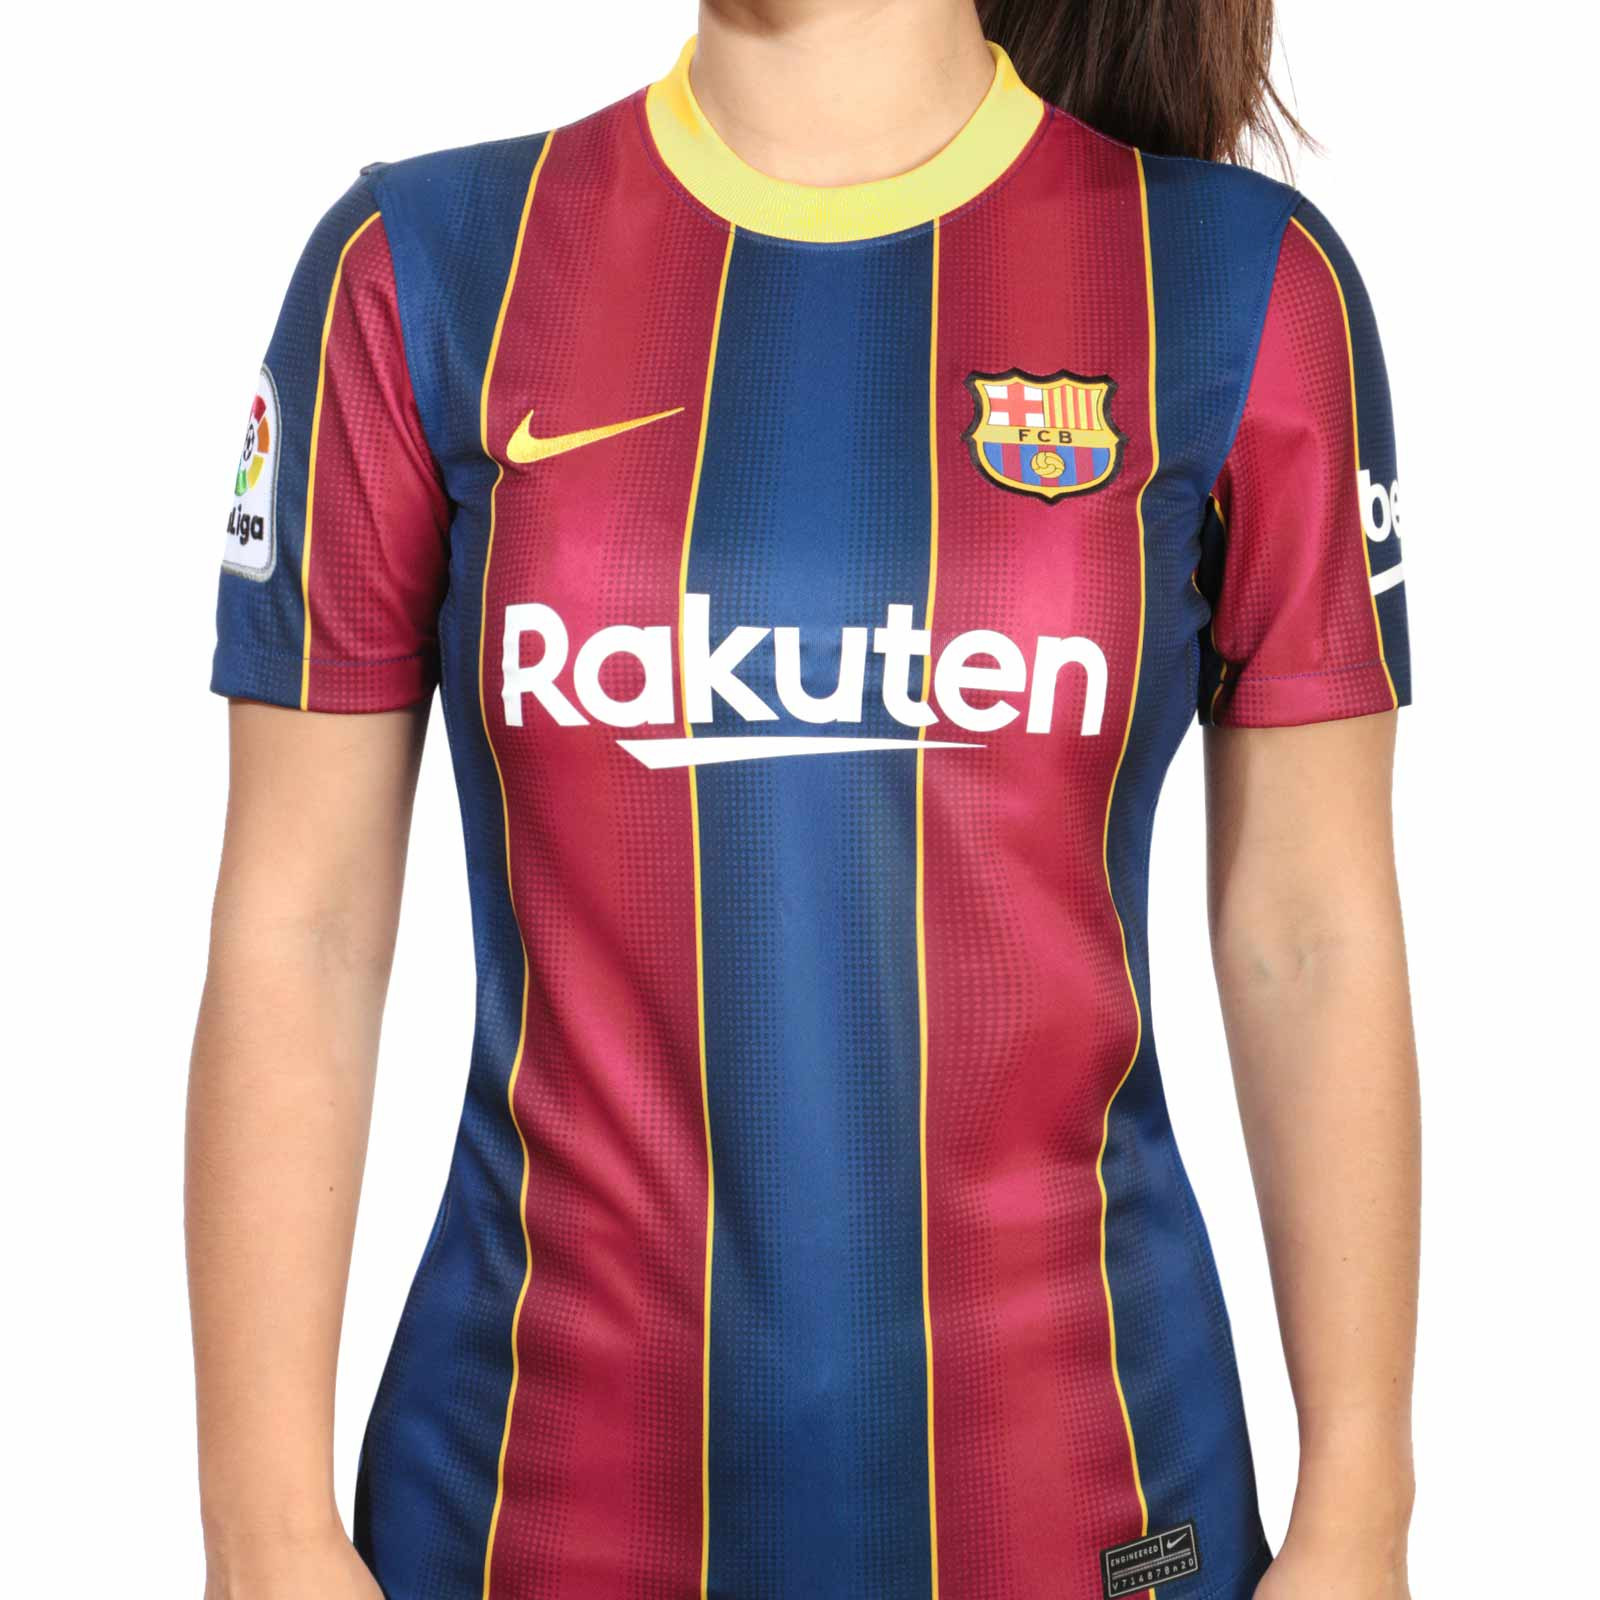 Cívico Inesperado Arena Camiseta Nike Barcelona Stadium mujer 2020 2021 | futbolmania